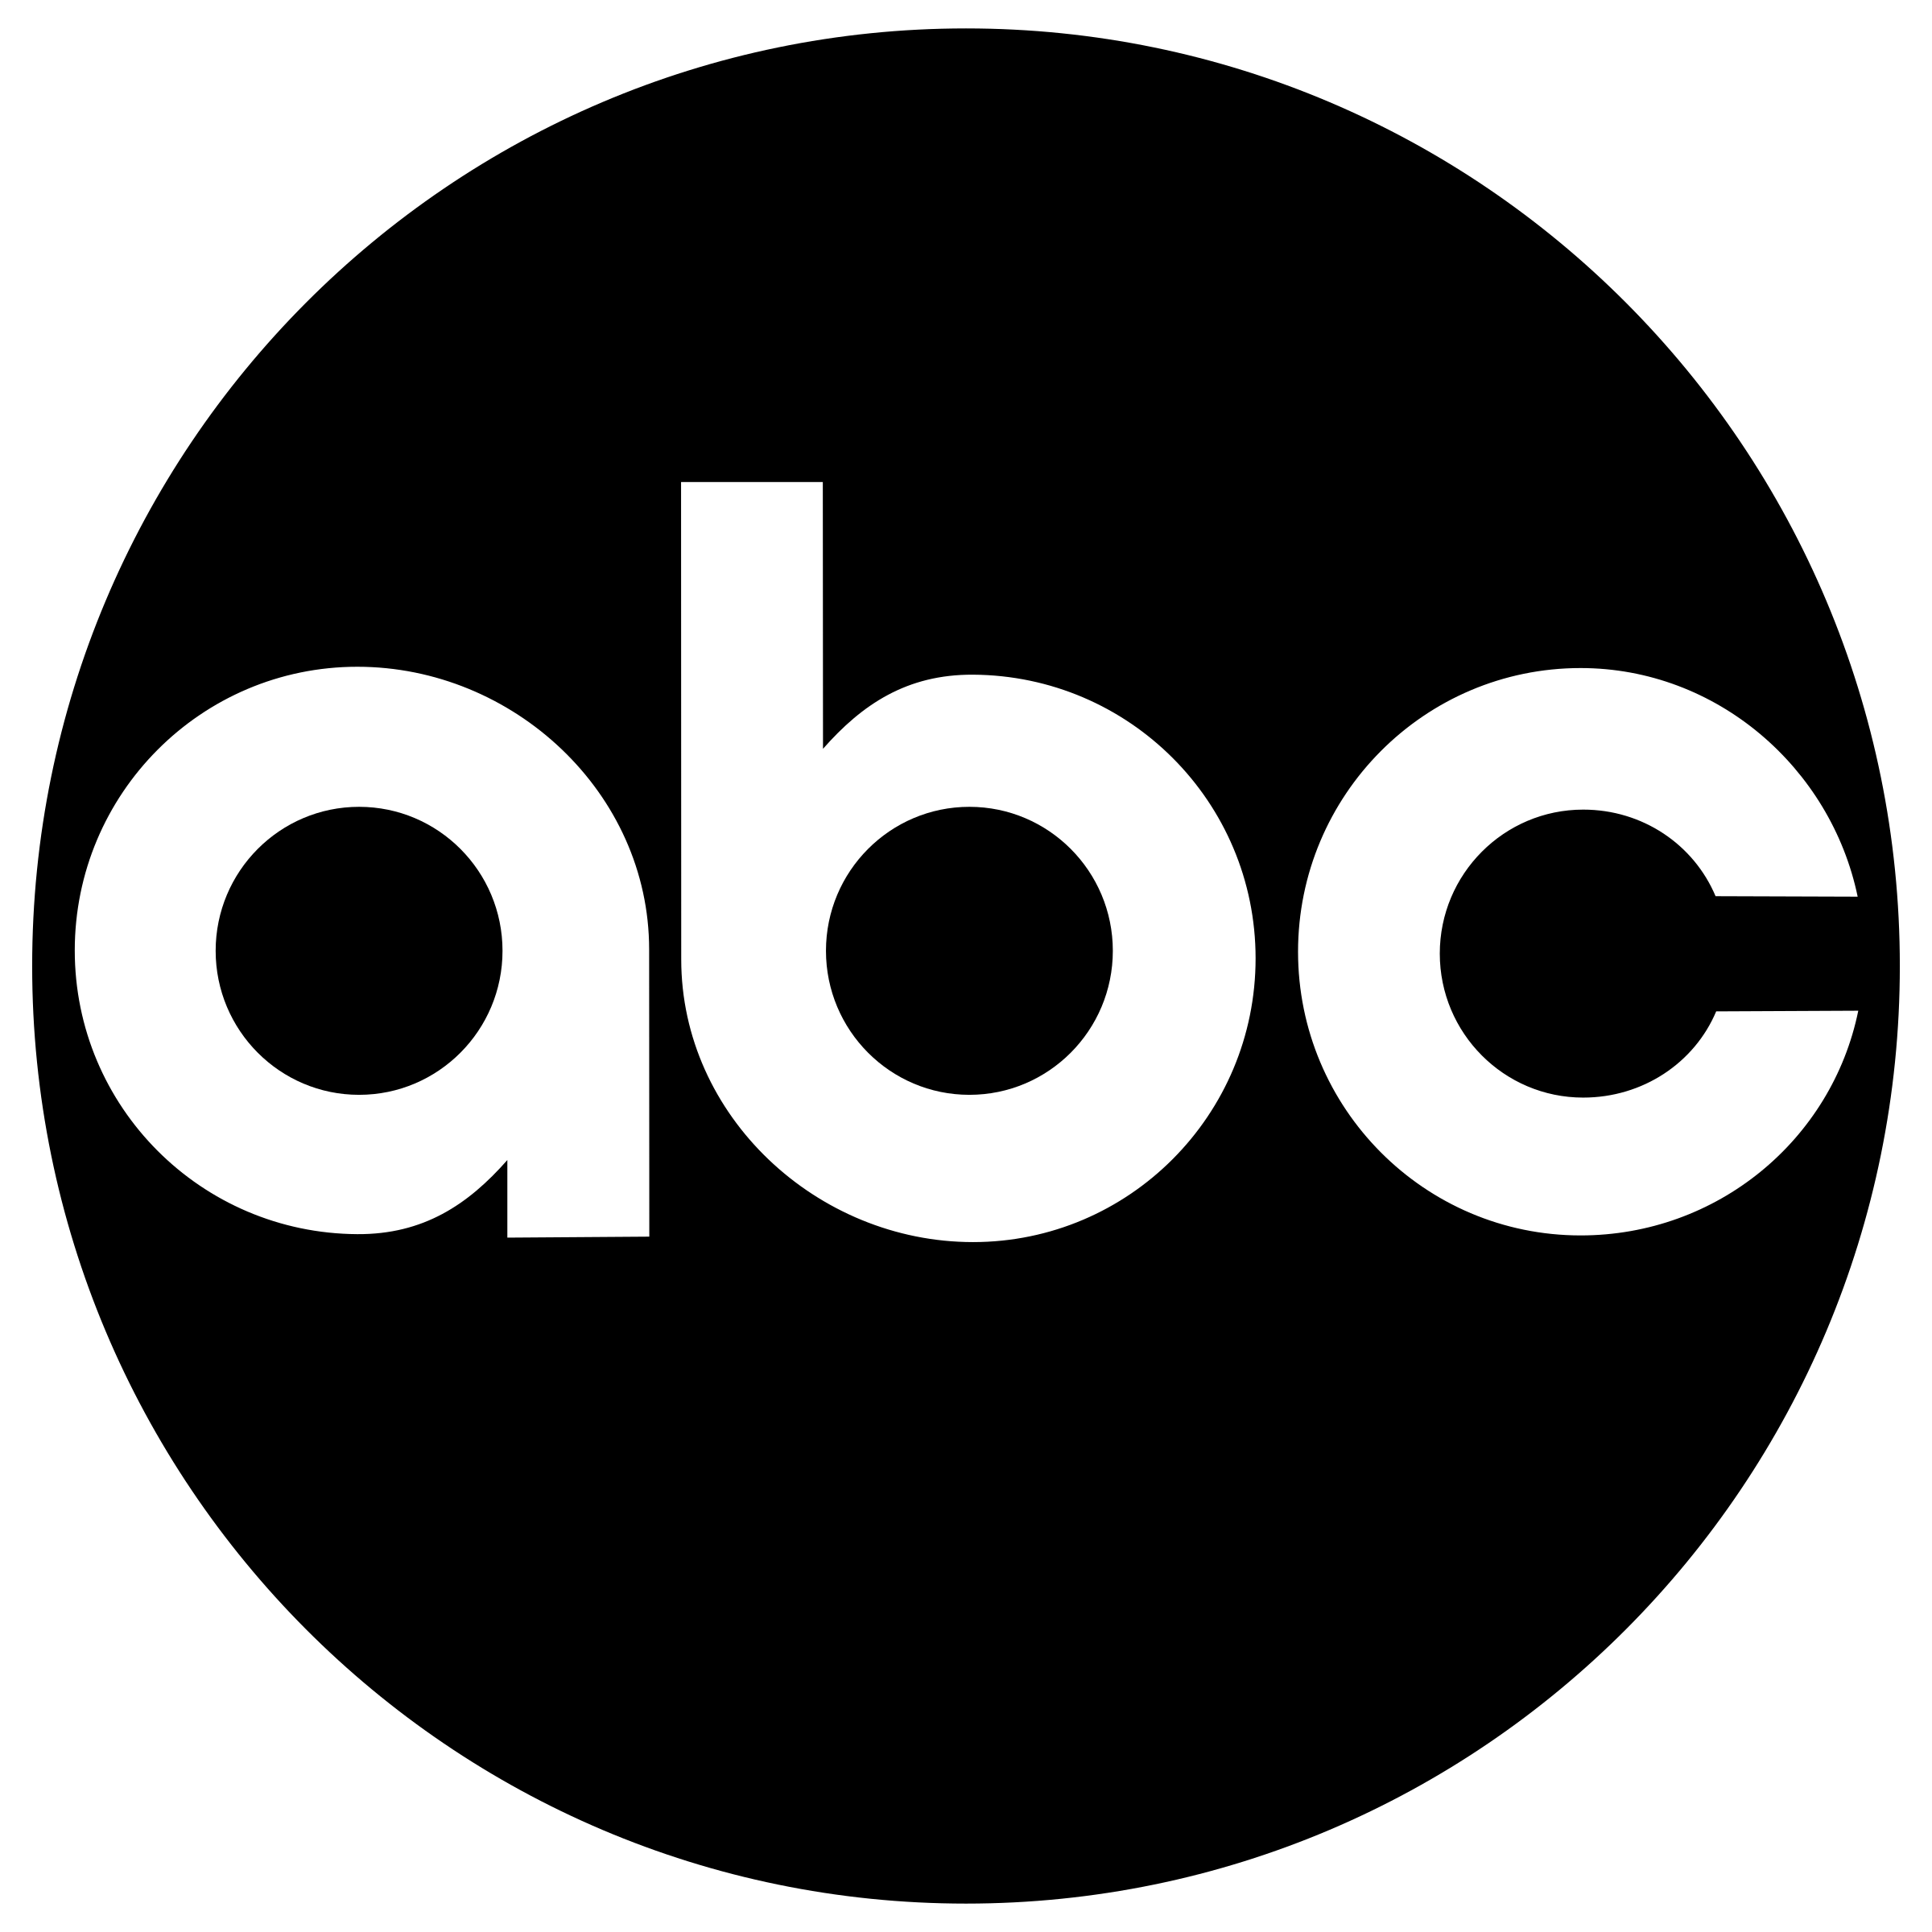 ABC Television Network logo